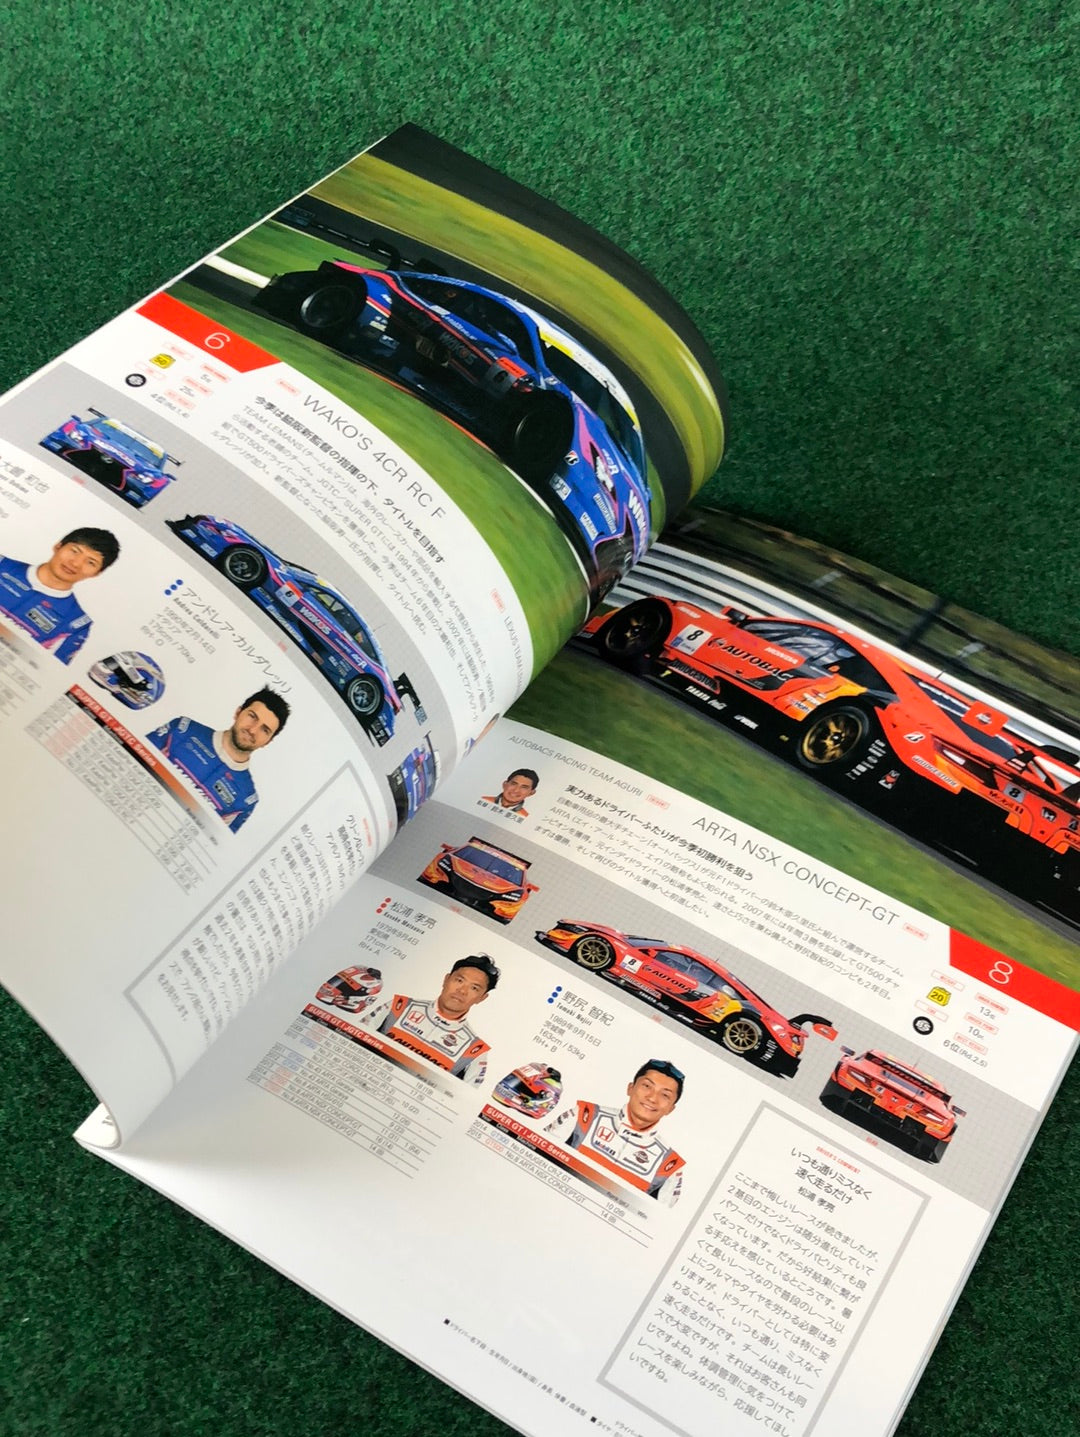 2016 Autobacs Super GT Round 6 at Suzuka Official Race Program